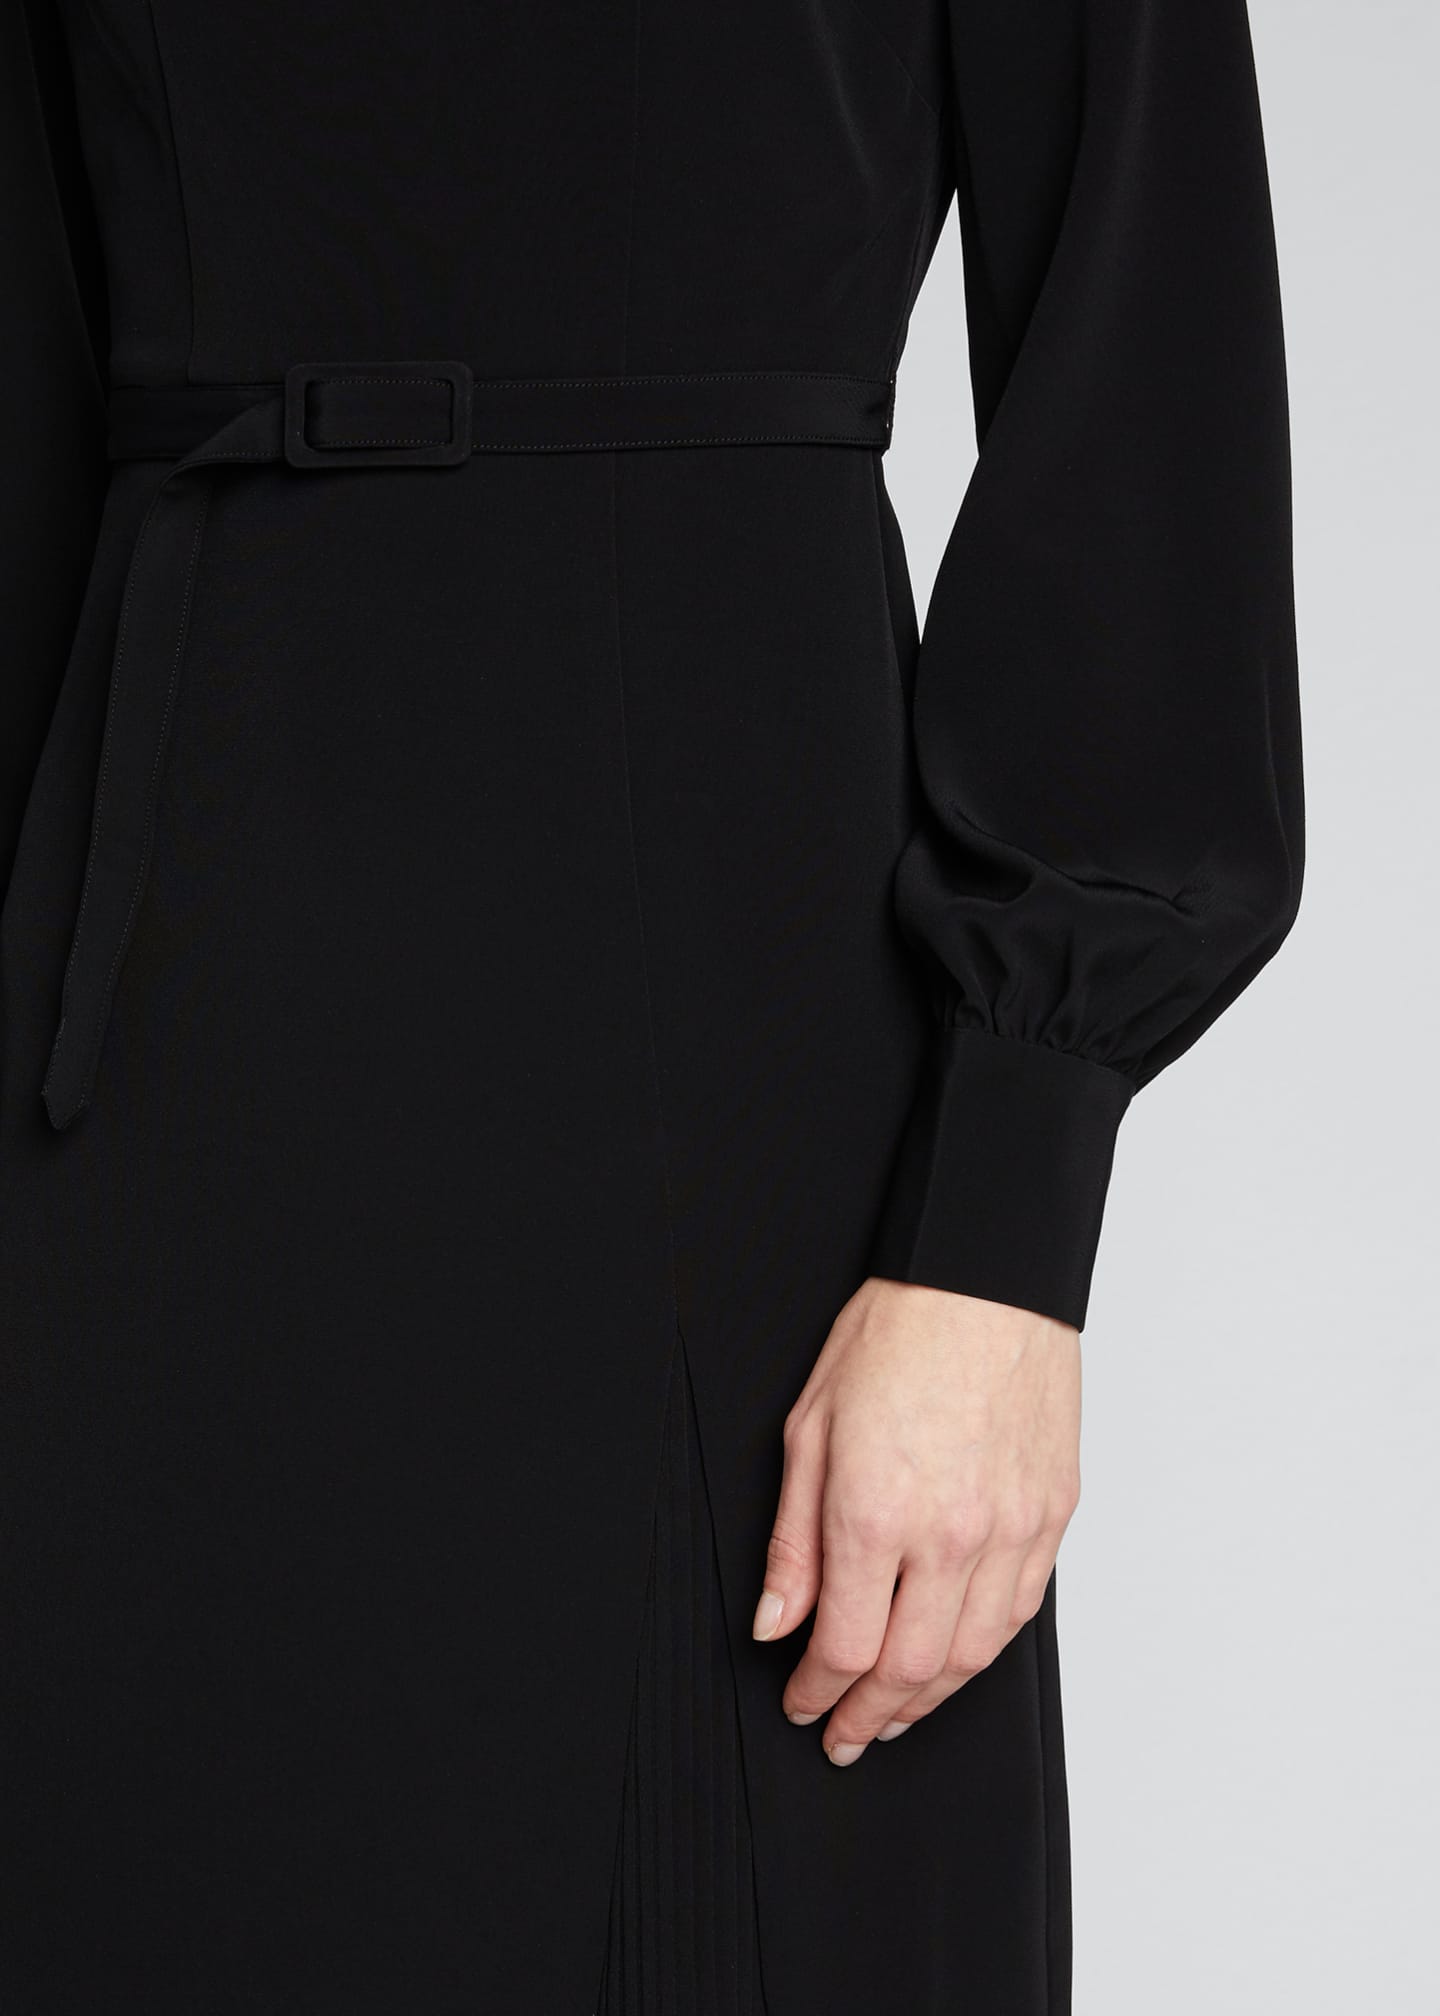 Co Tifa Stretch Crepe Long-Sleeve Belted Dress - Bergdorf Goodman